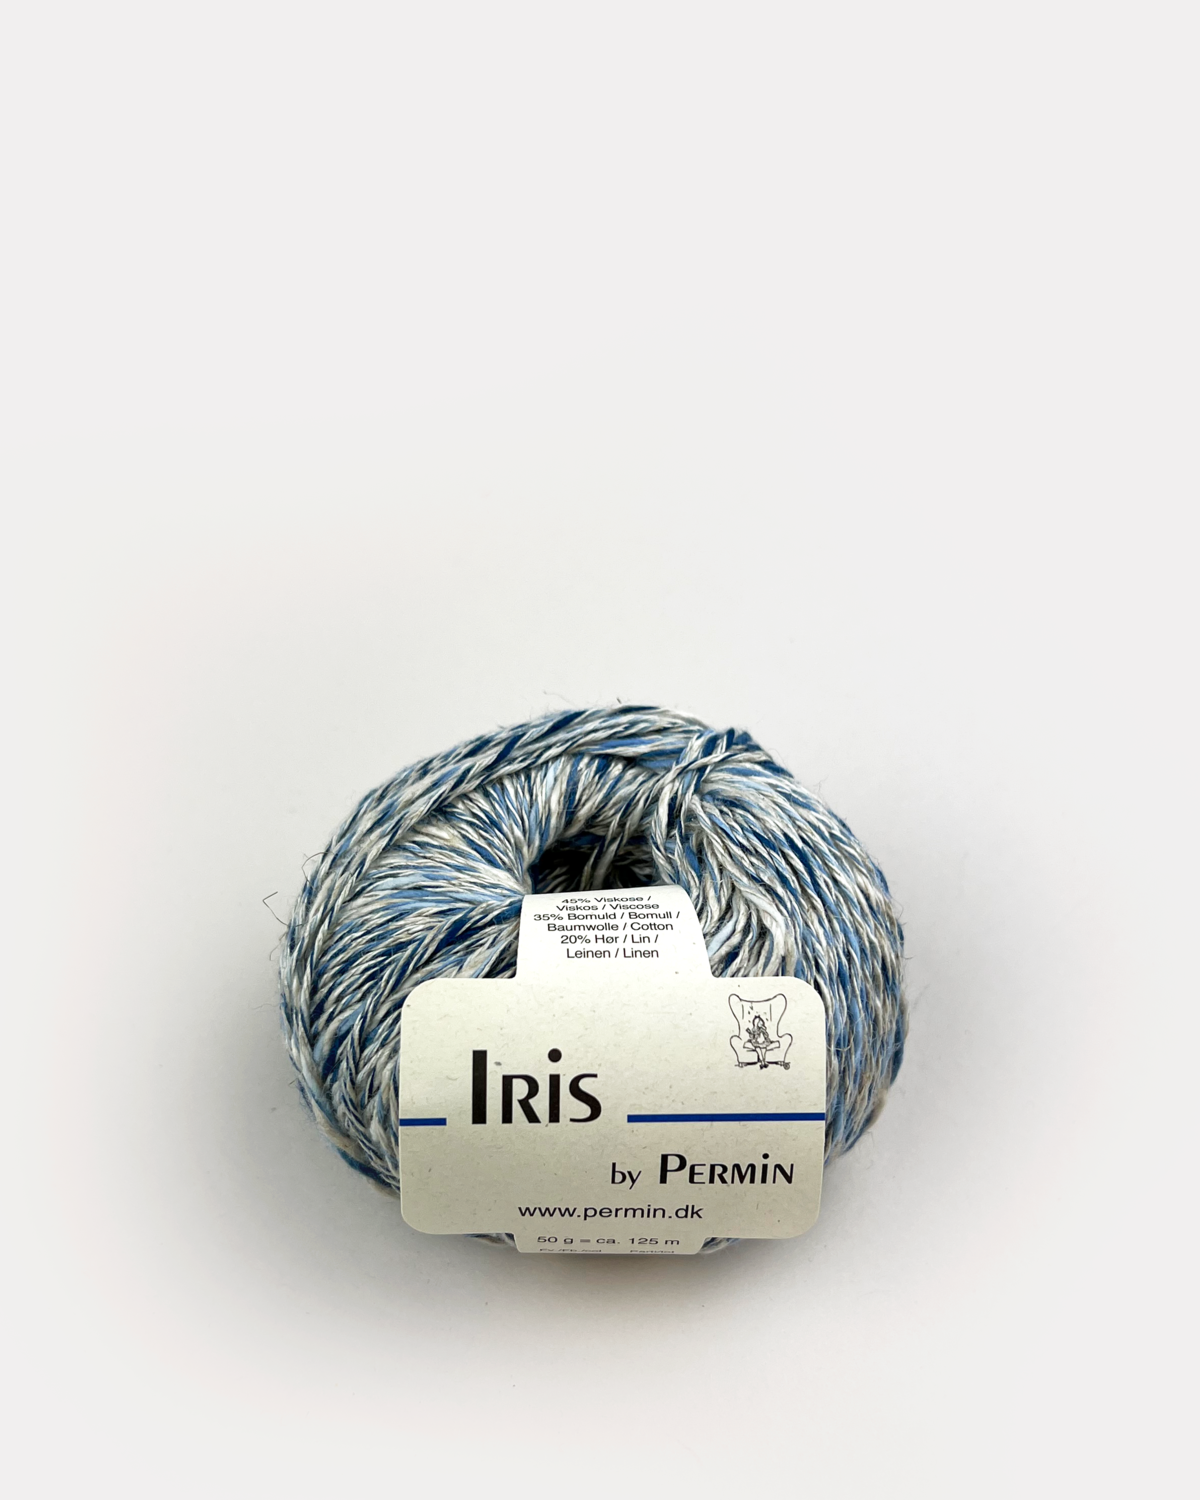 Iris by Permin - - Garnbutik - Kvalitet og service i Brug for råd, ring på 26 74 72 04